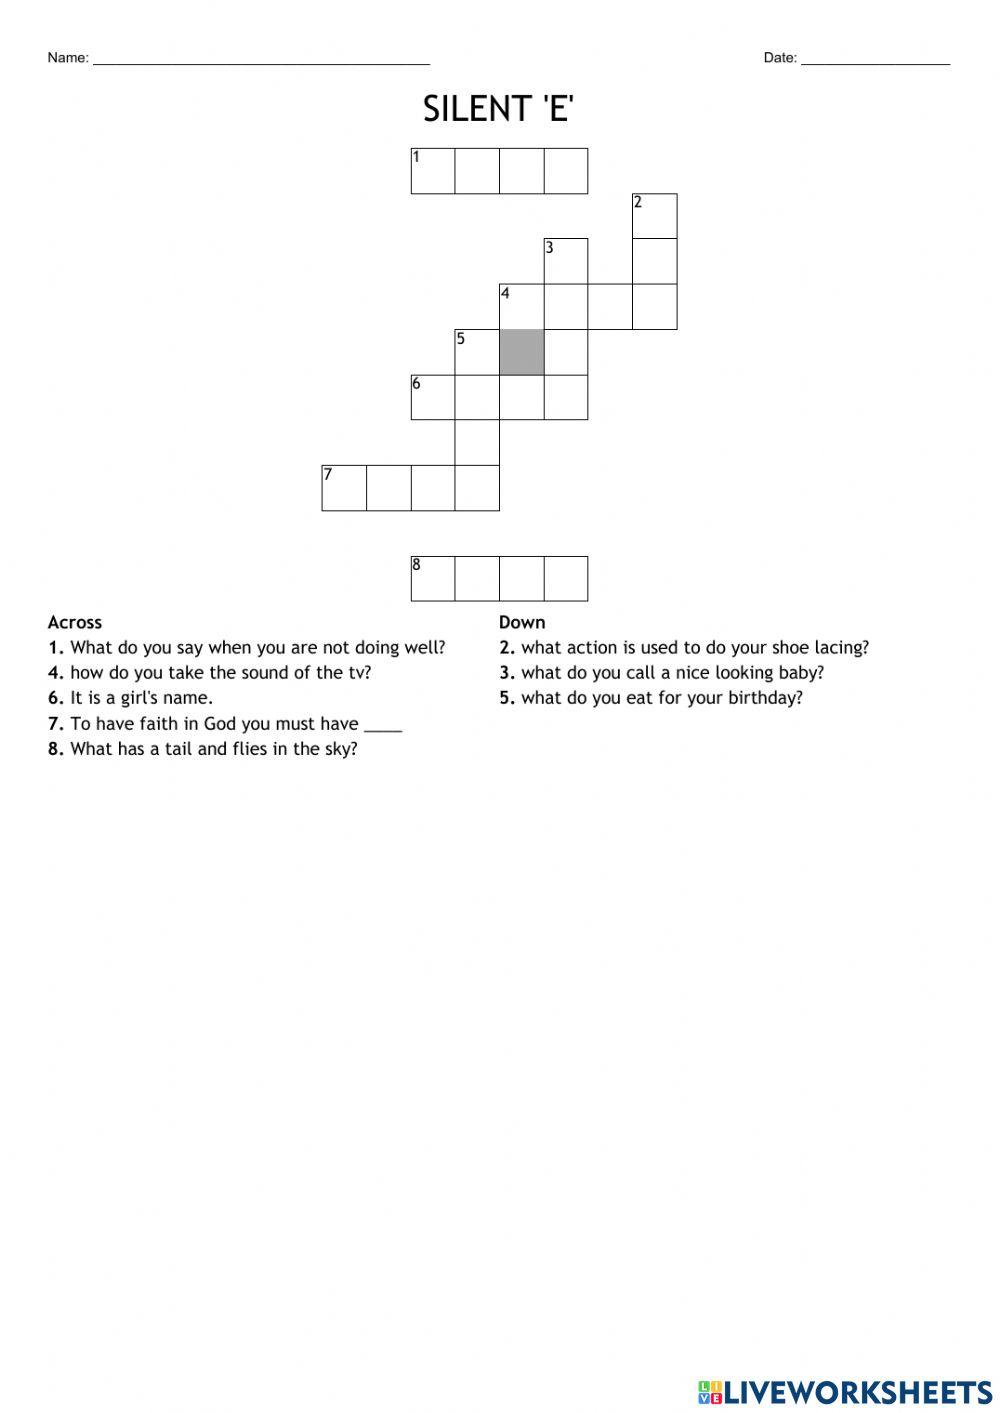 Cross word puzzle